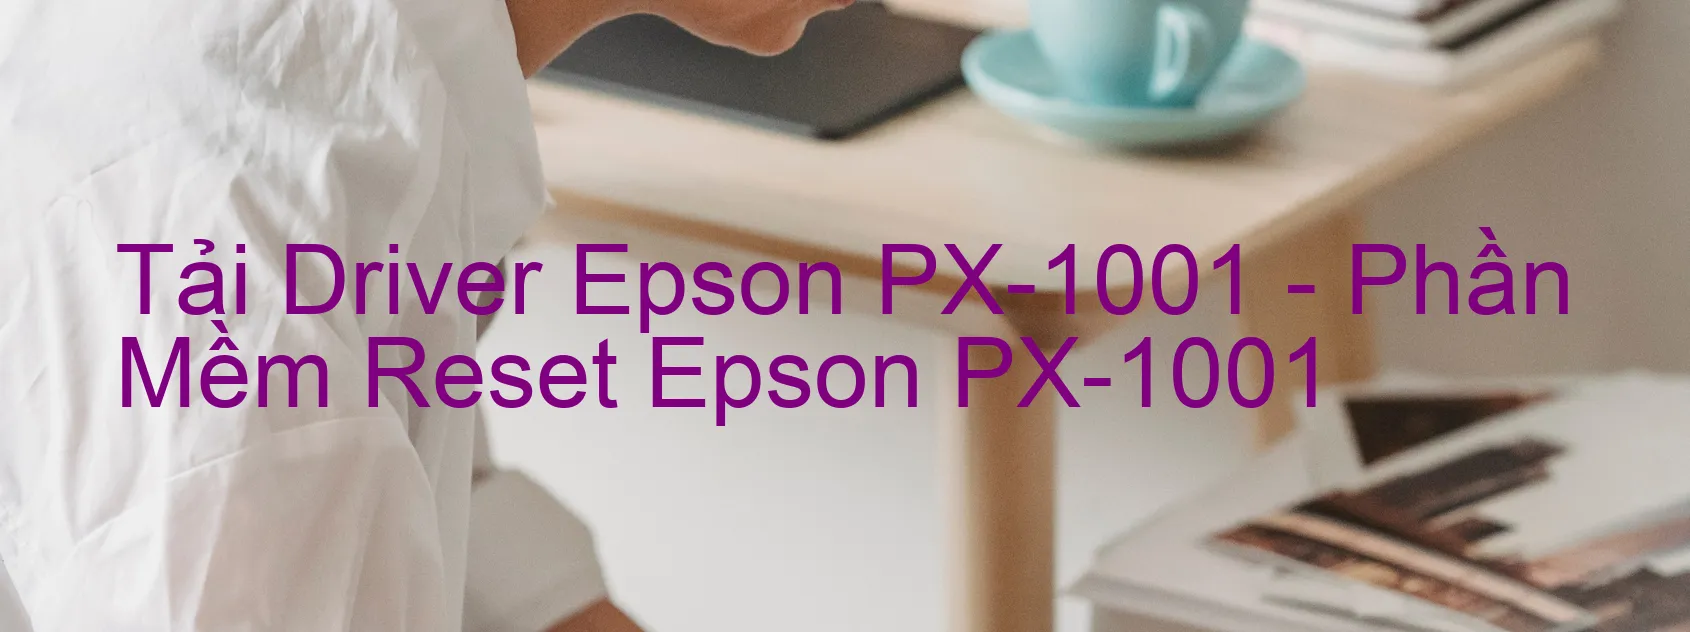 Driver Epson PX-1001, Phần Mềm Reset Epson PX-1001